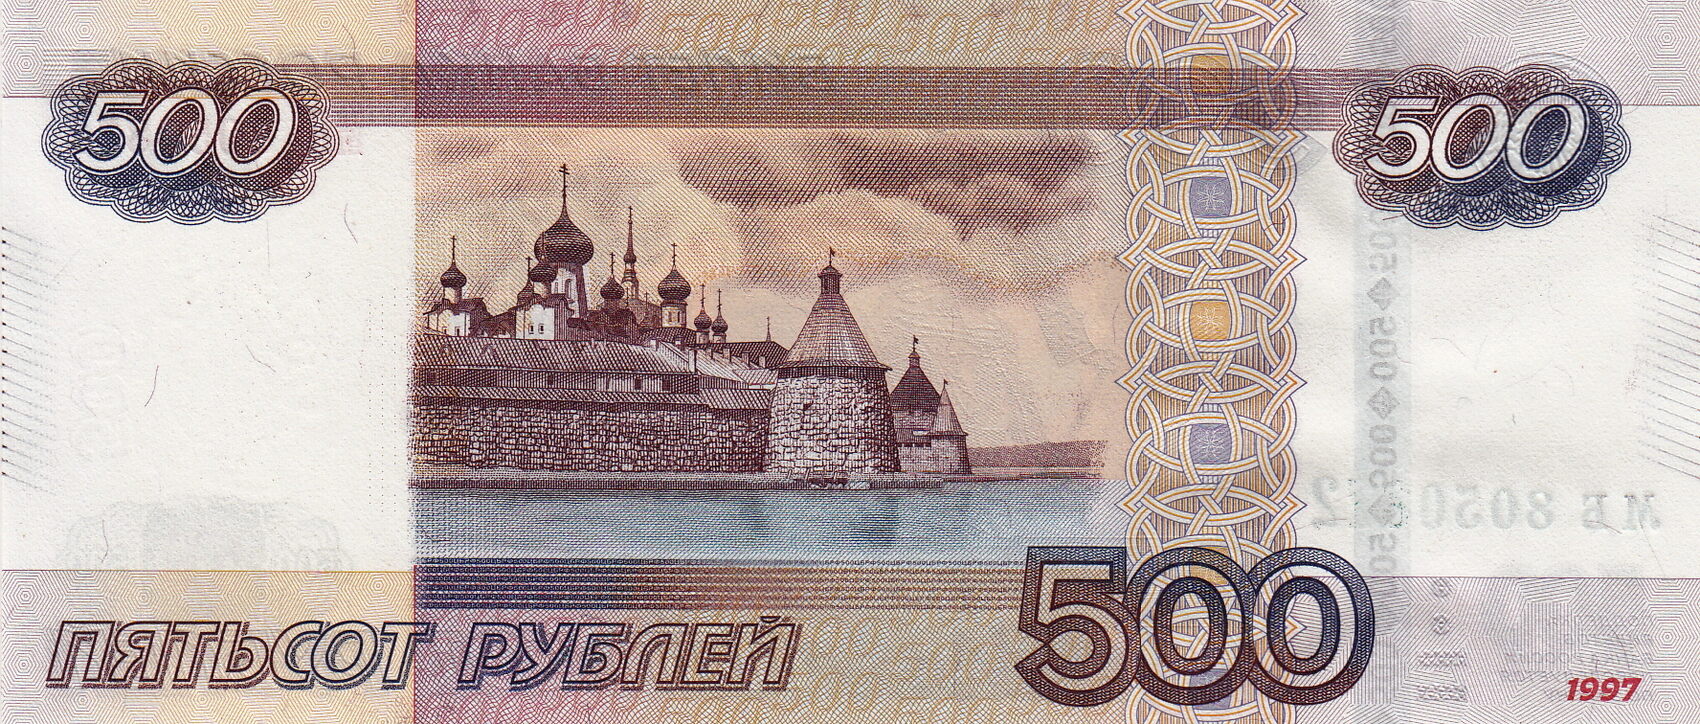 Steam 500 рублей фото 63